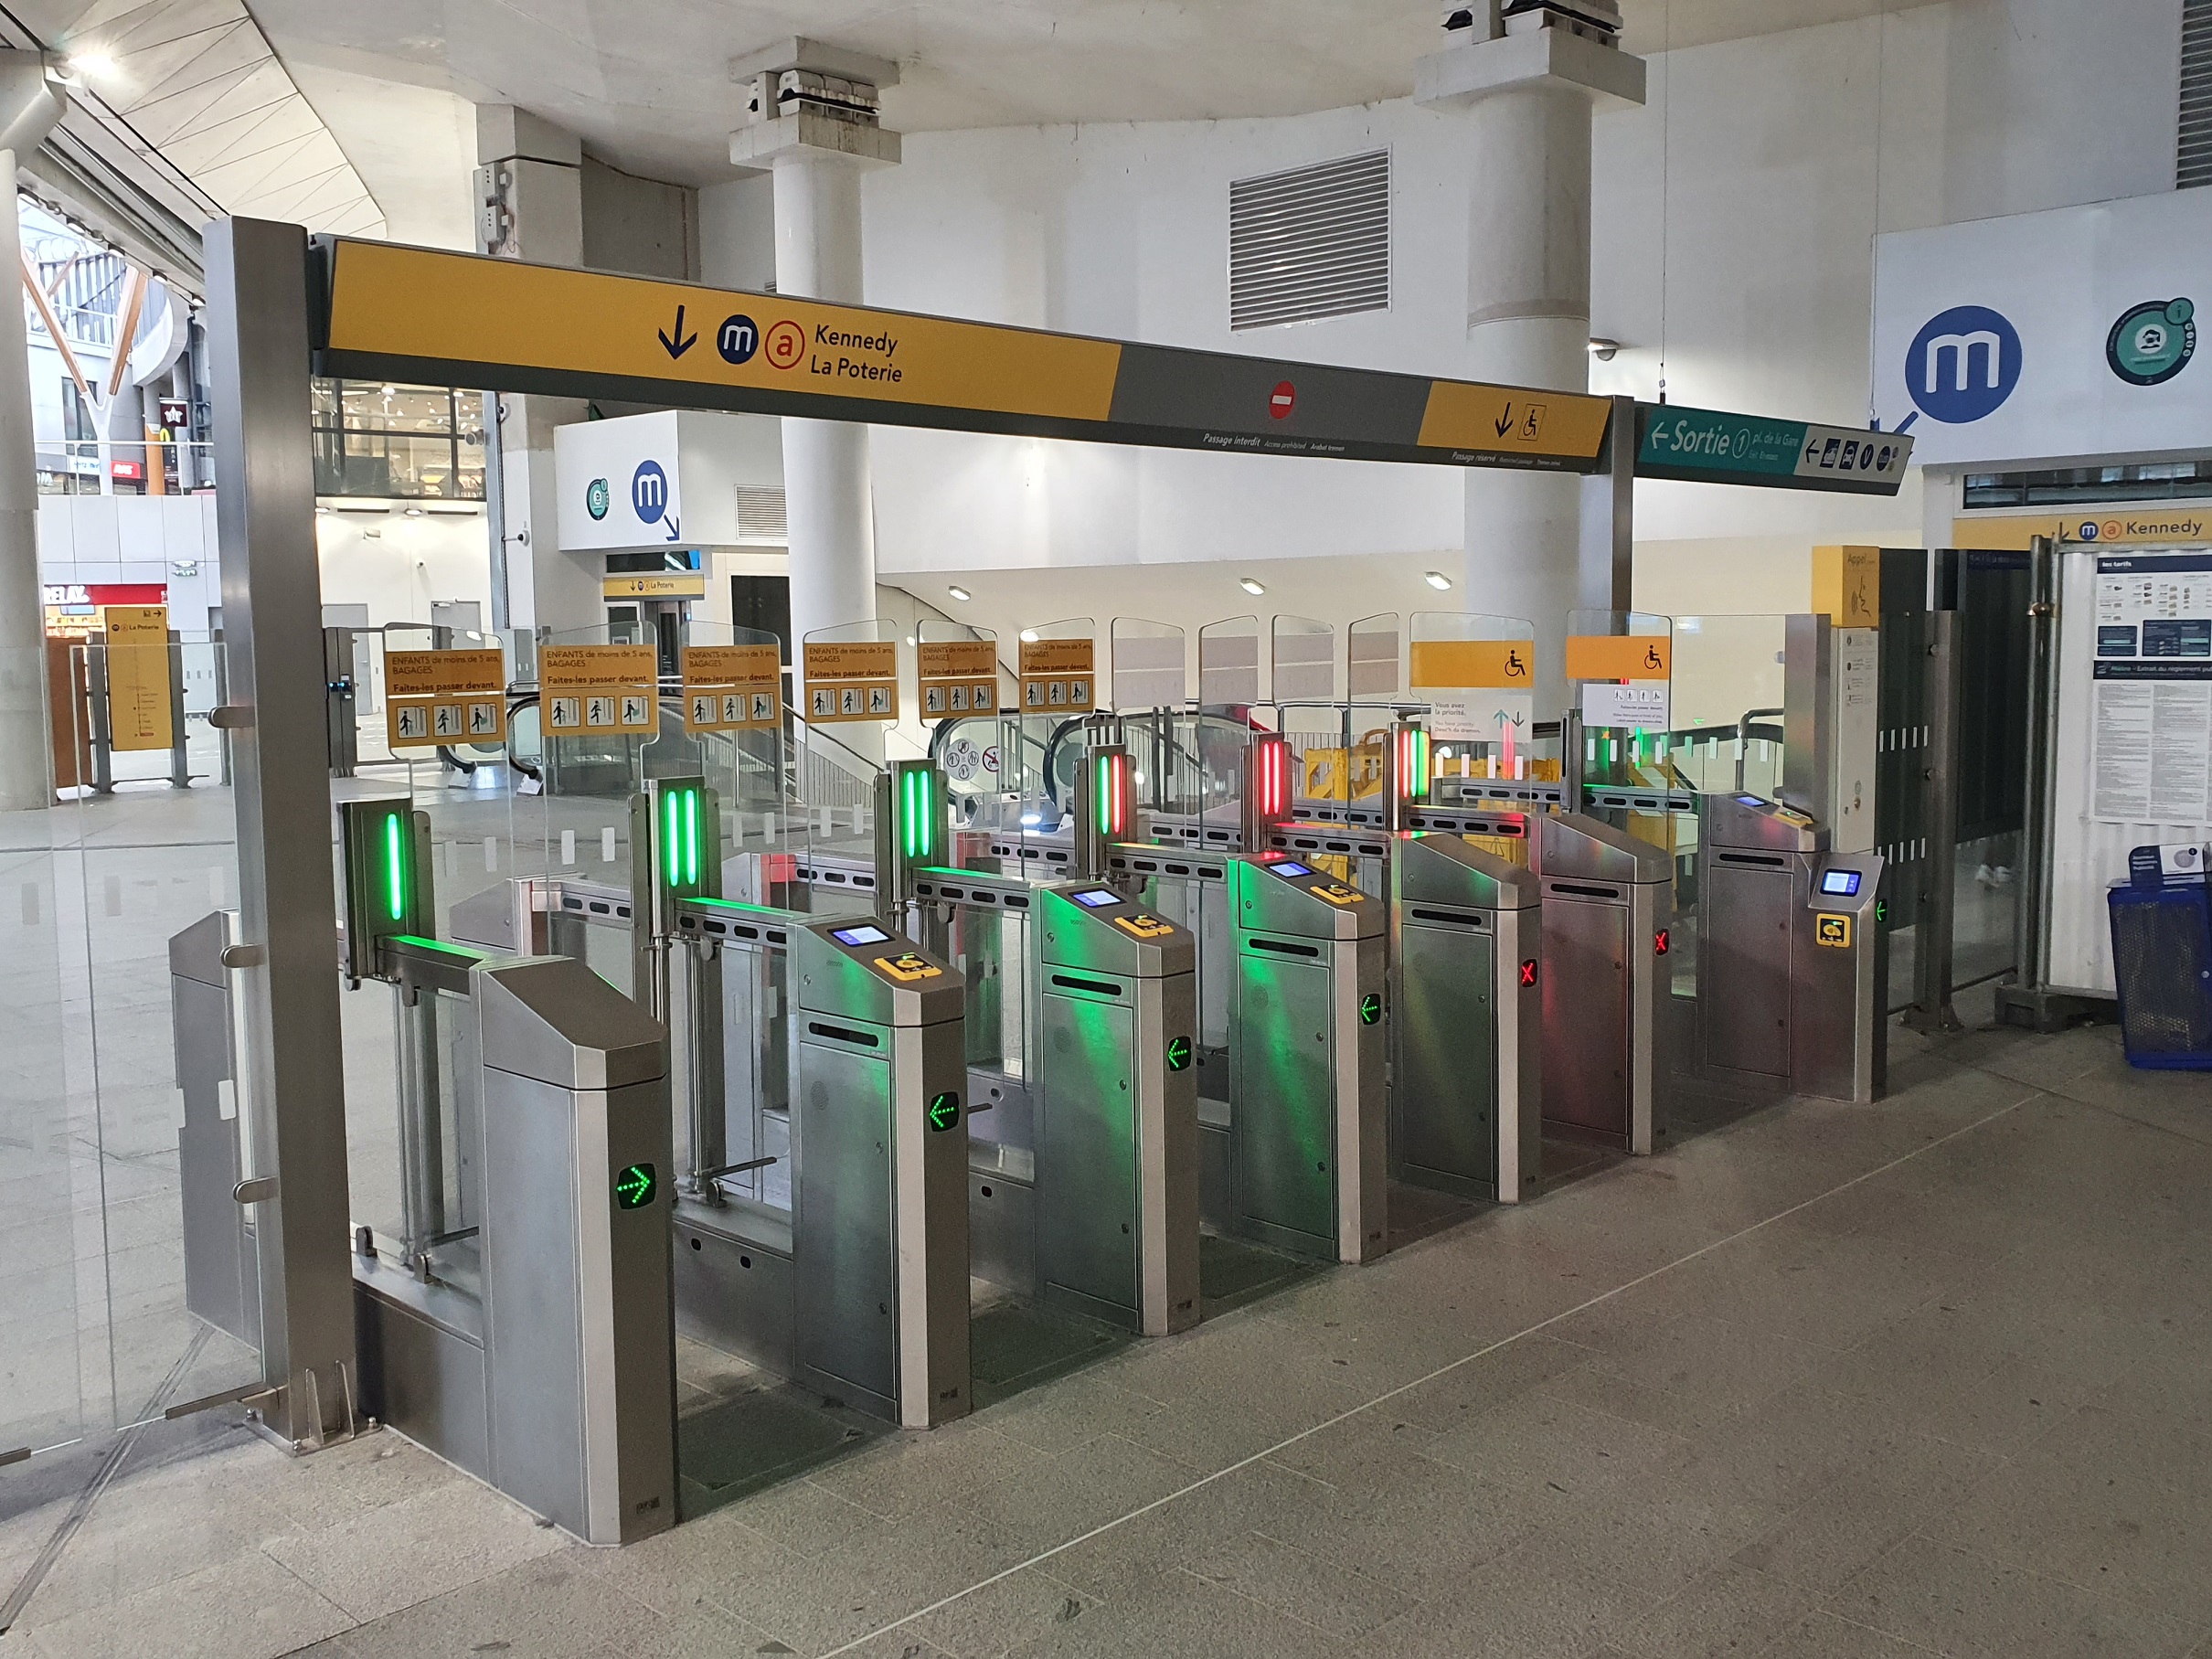 EMV payment ticketing metro Rennes transit image credit: Conduent Transportation